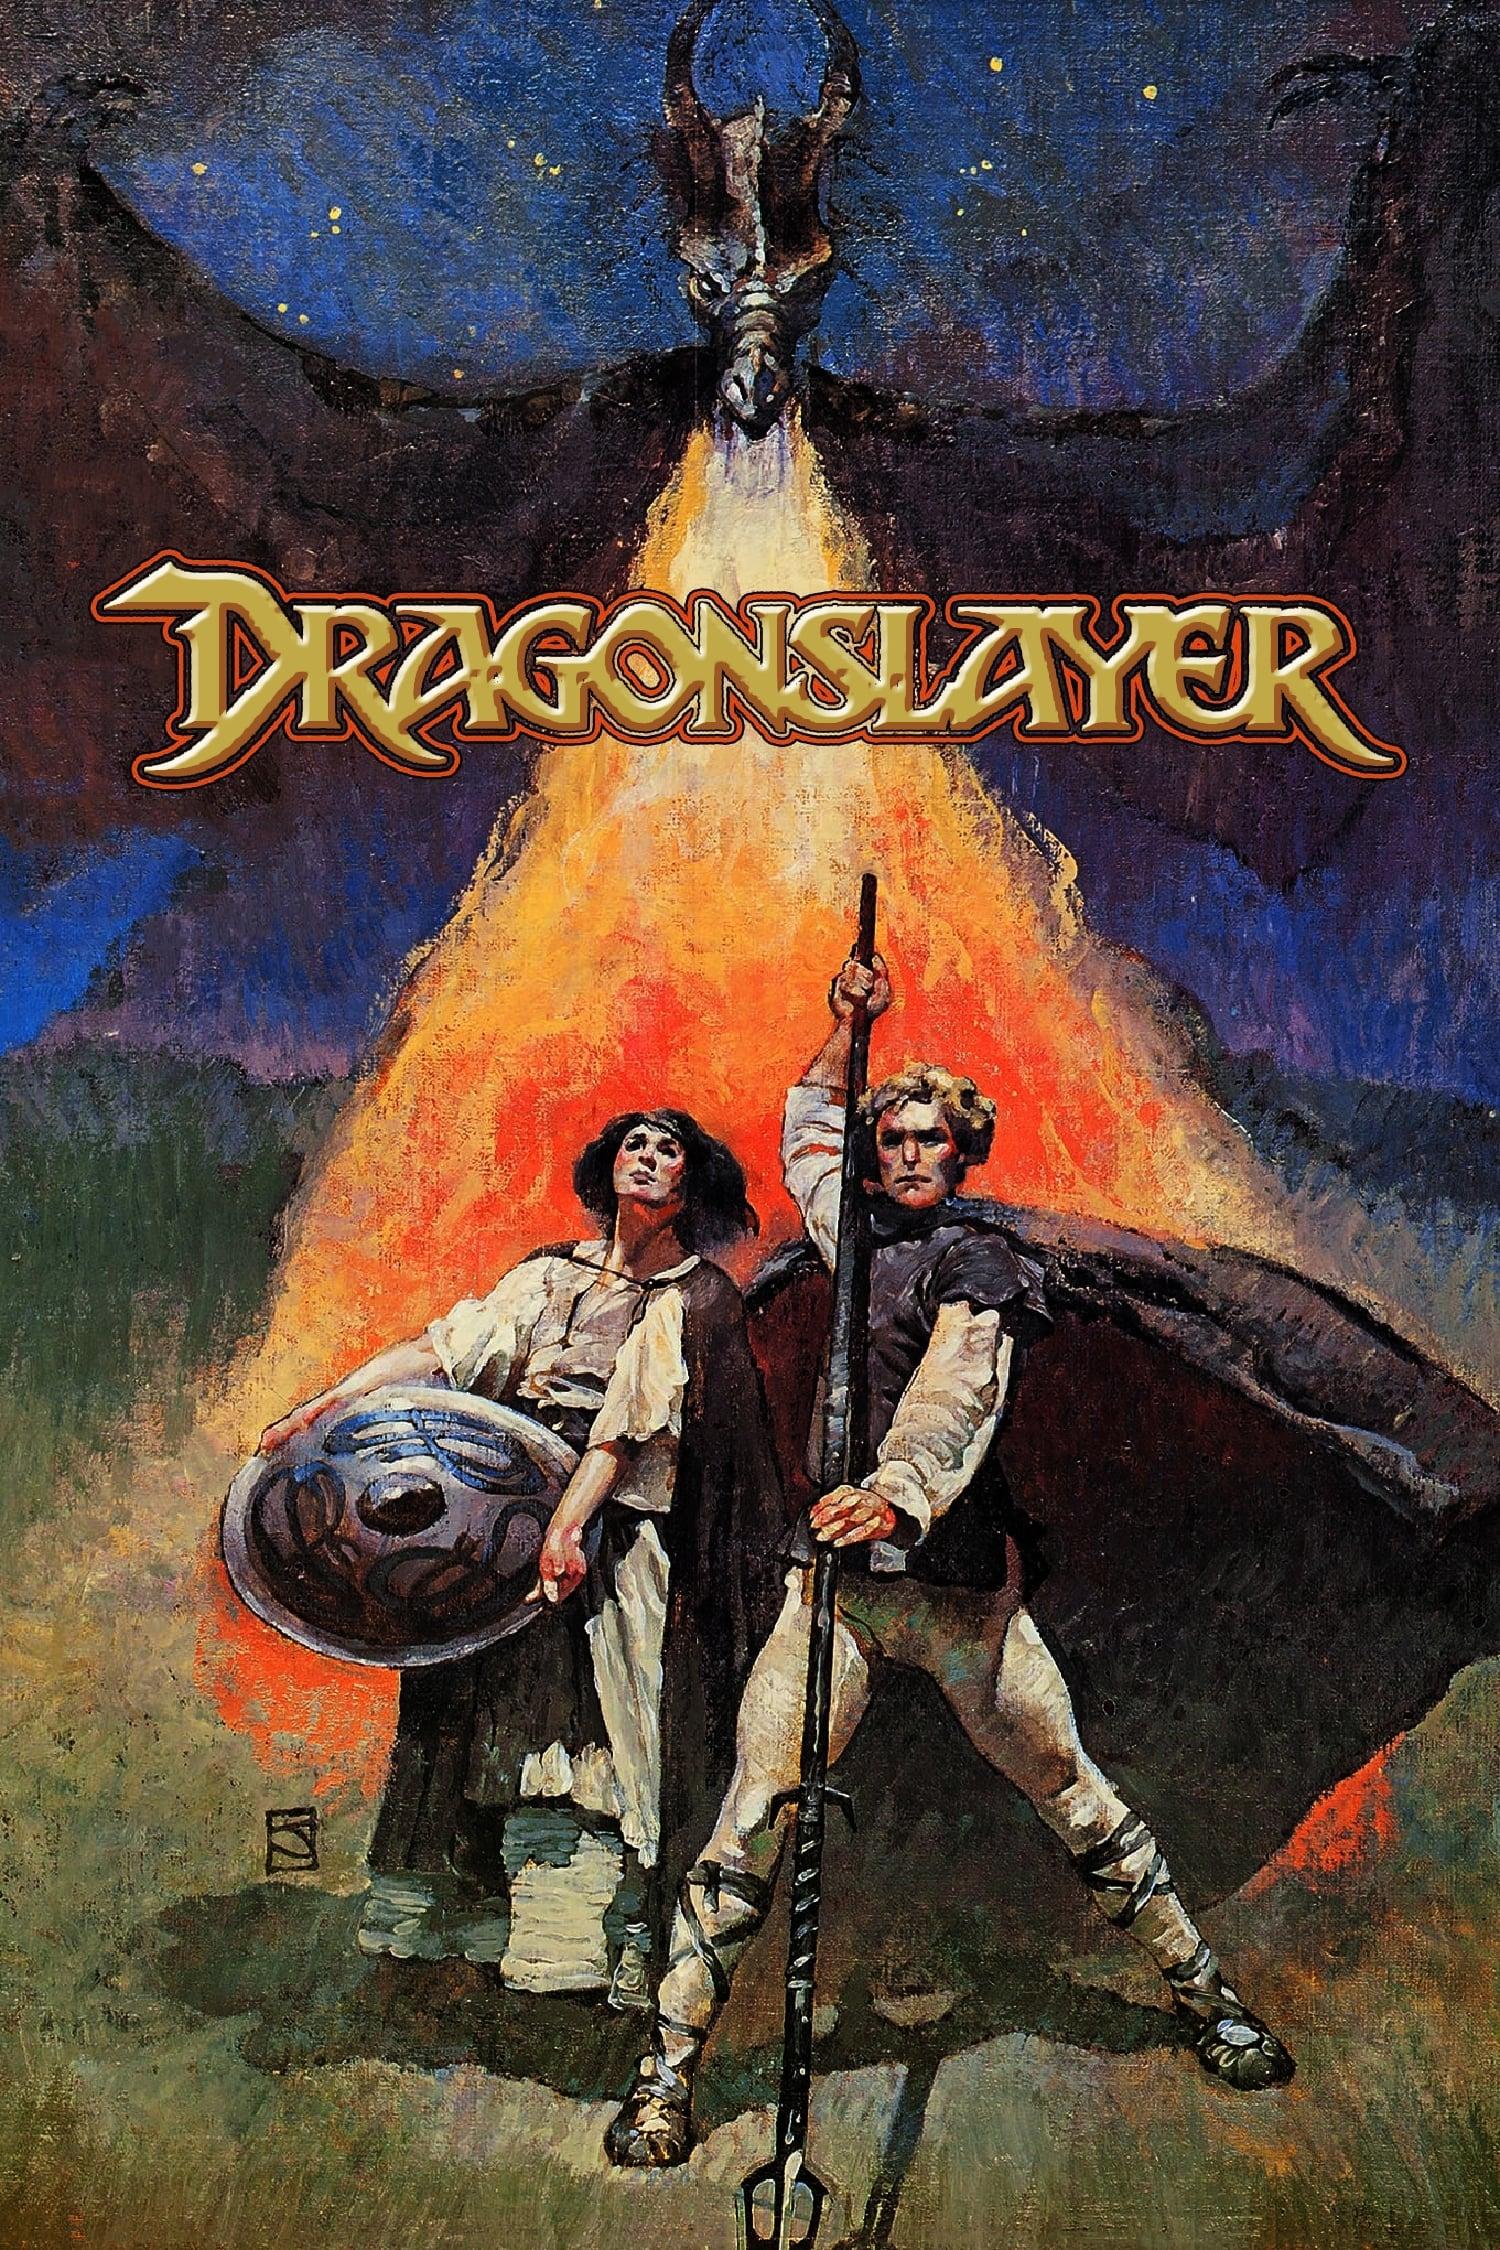 Dragonslayer poster